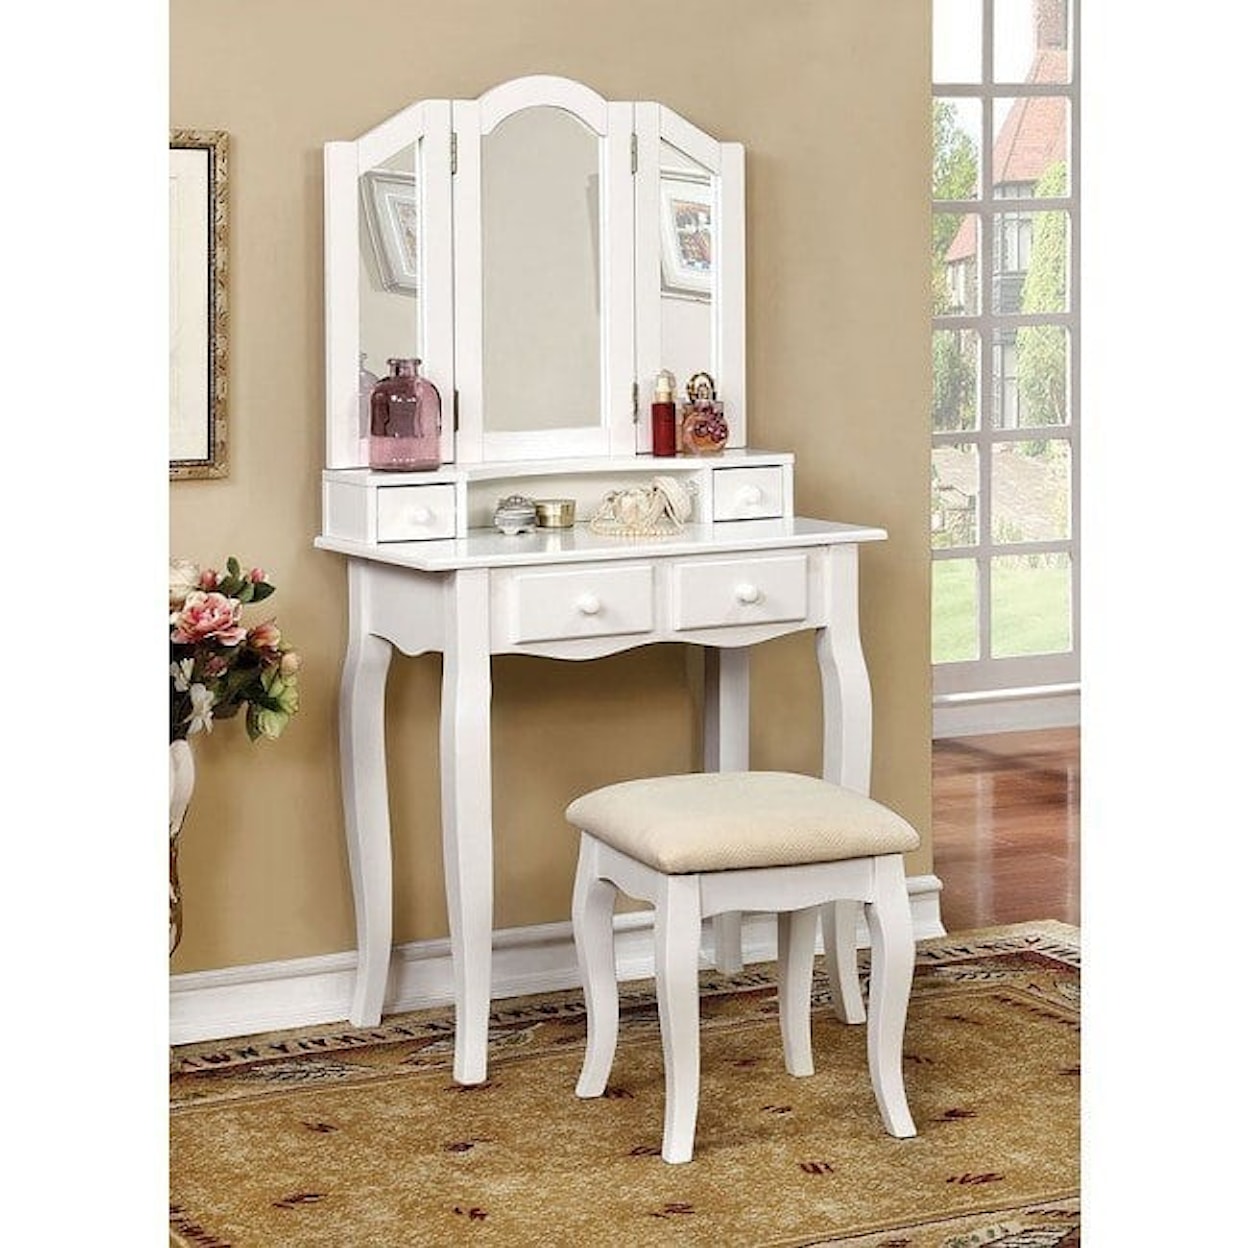 Furniture of America Janie JANIE WHITE VANITY WITH STOOL |